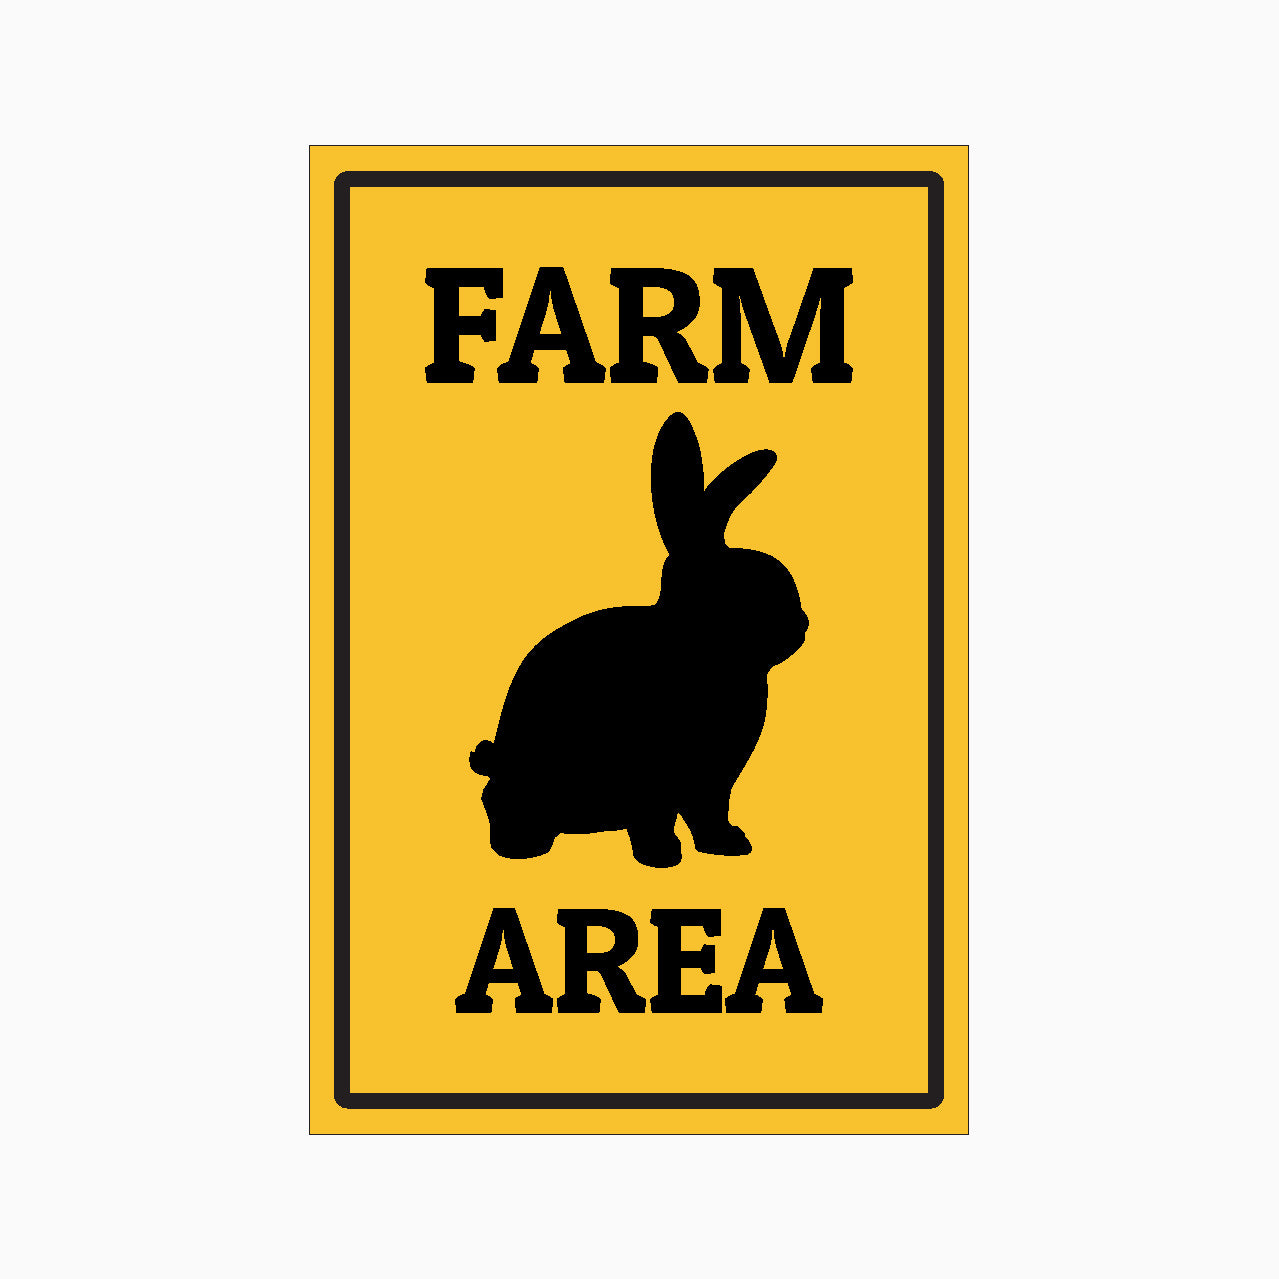 FARM AREA SIGN - farm signs australia